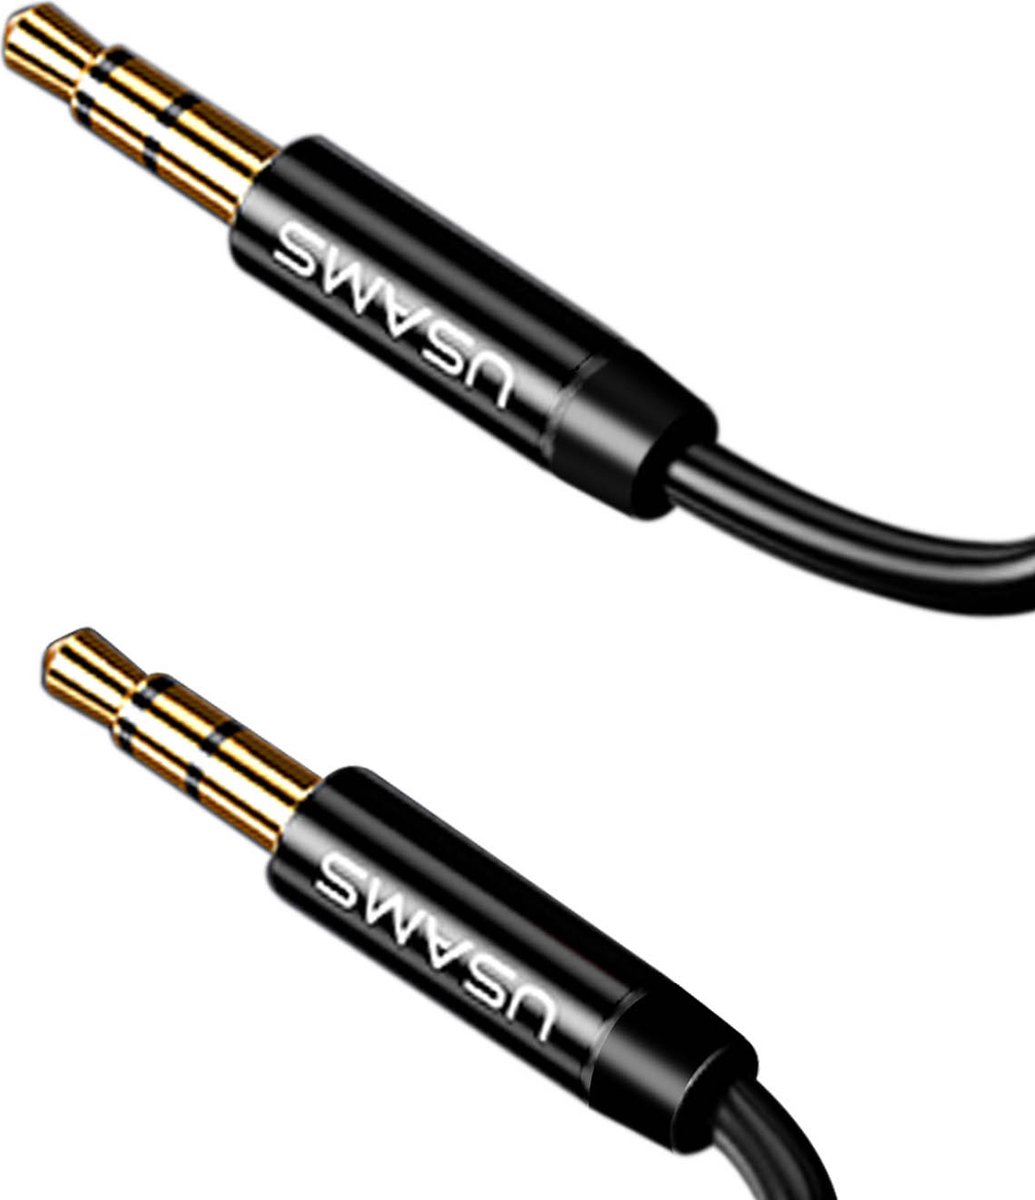 Cables USB Linq Adaptateur Audio Lightning vers Double Jack 3.5mm